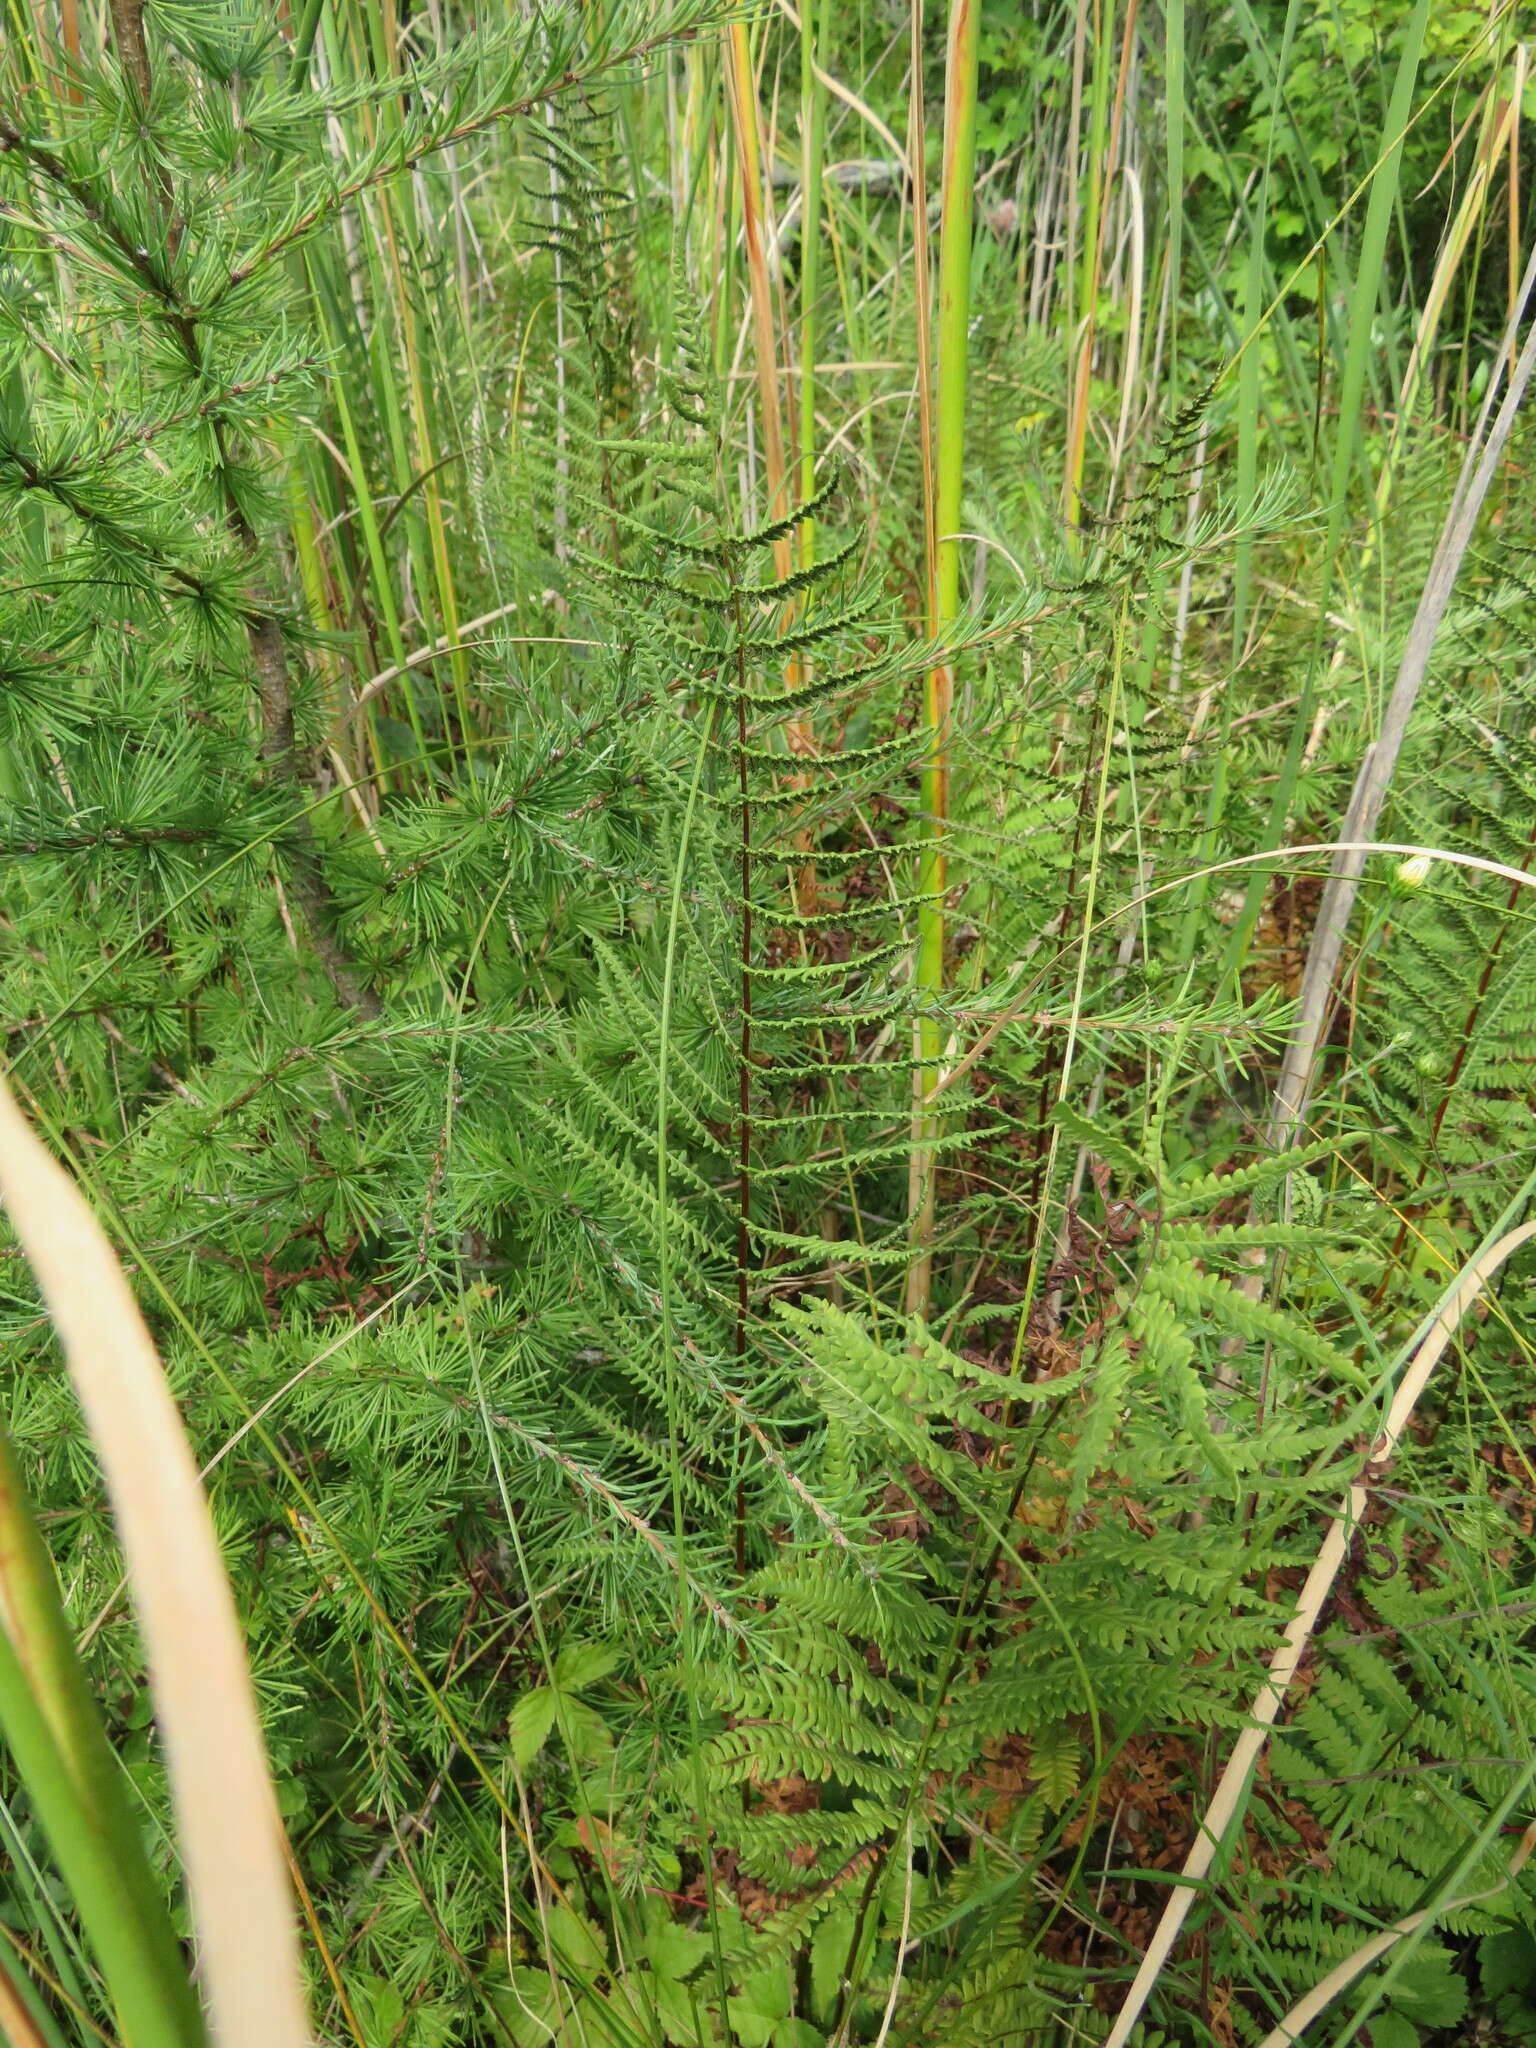 Image of eastern marsh fern